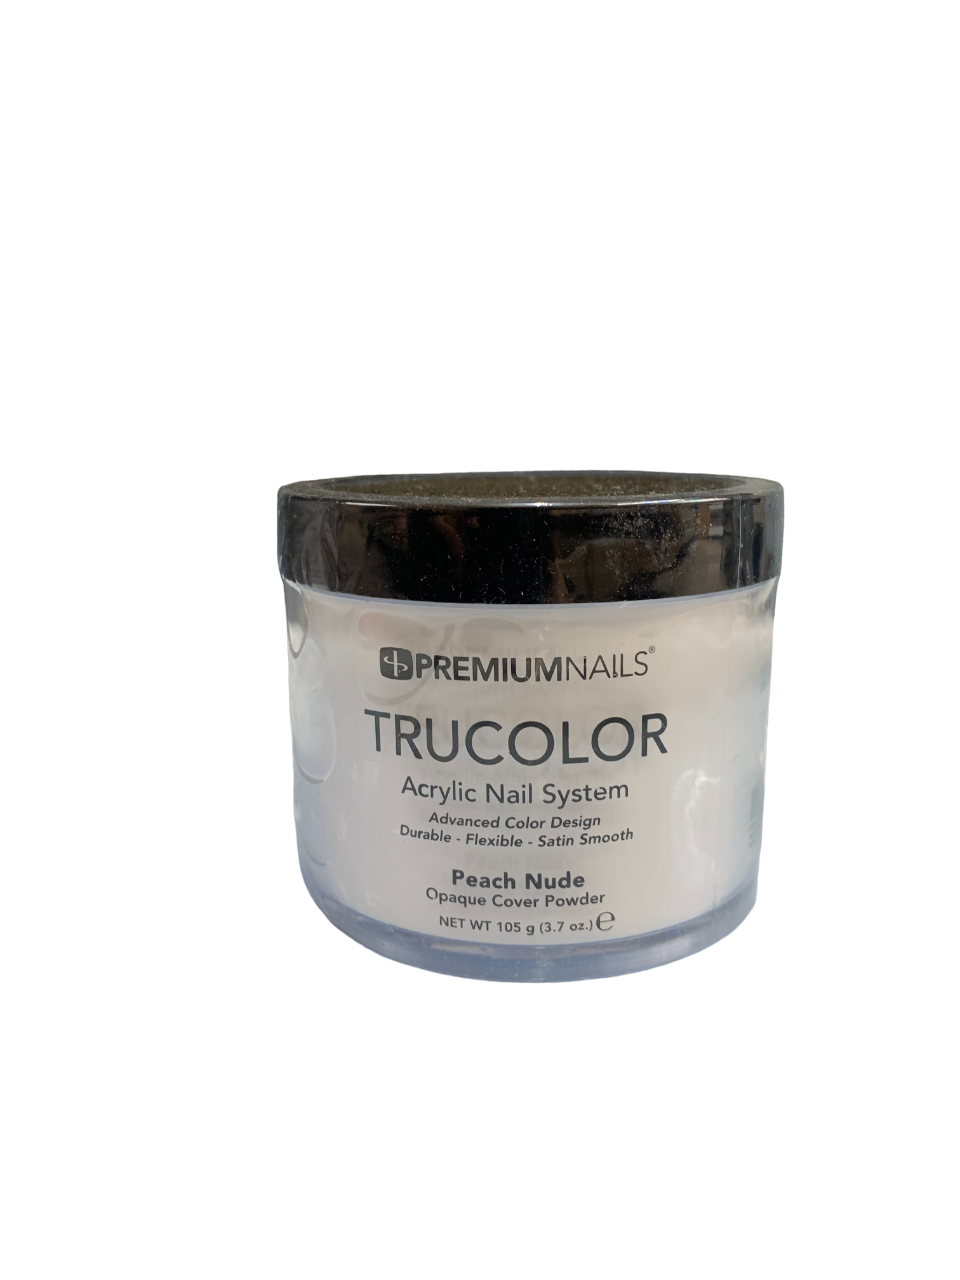 Premiumnails Trucolor Acrylic Powder - TCPN - Peach Nude